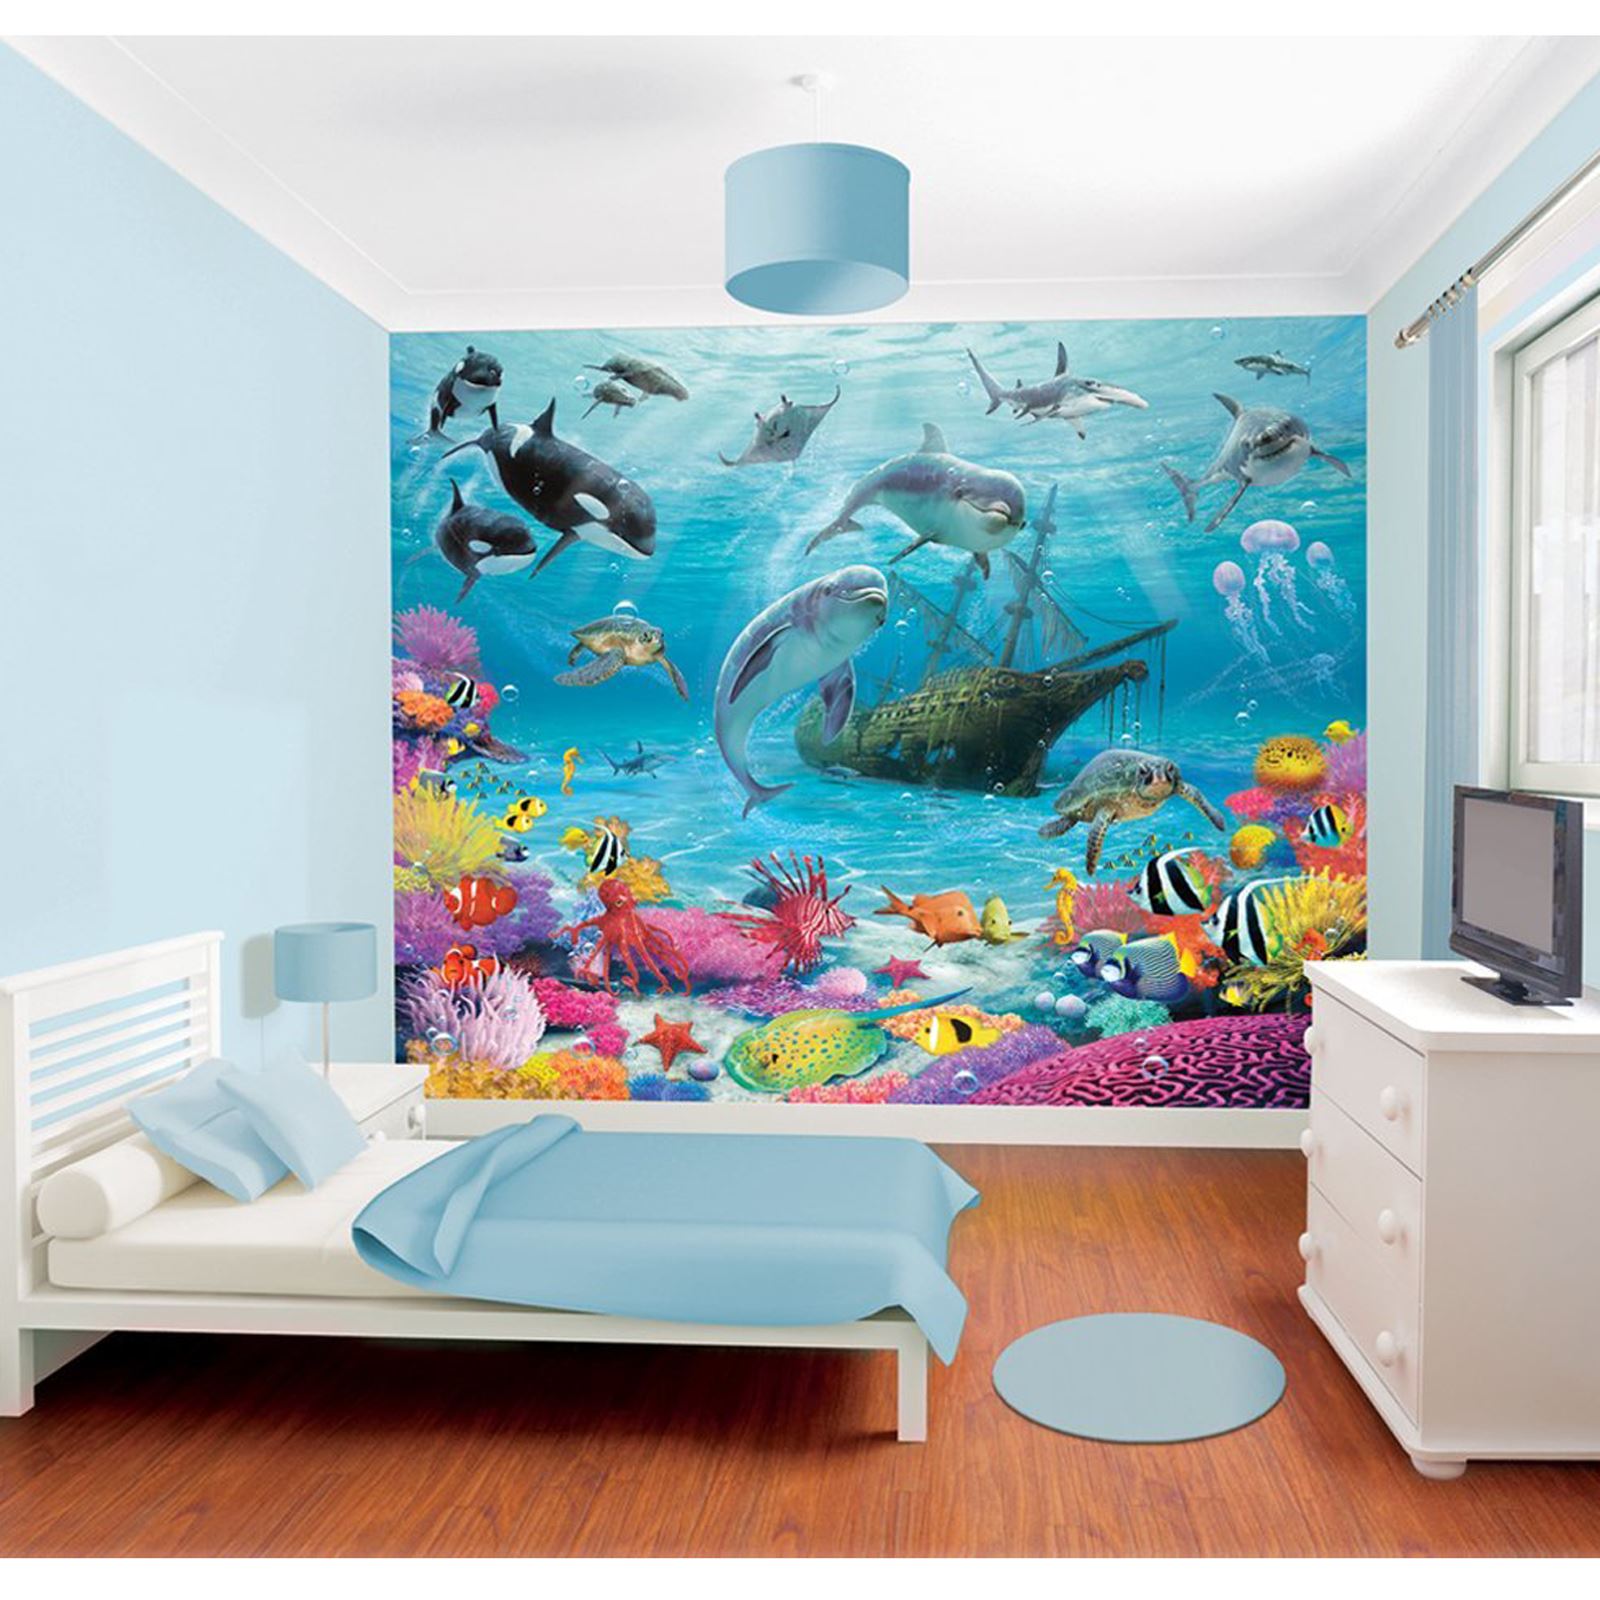 fondos de pantalla de dormitorio peppa pig,agua,turquesa,pared,habitación,mural